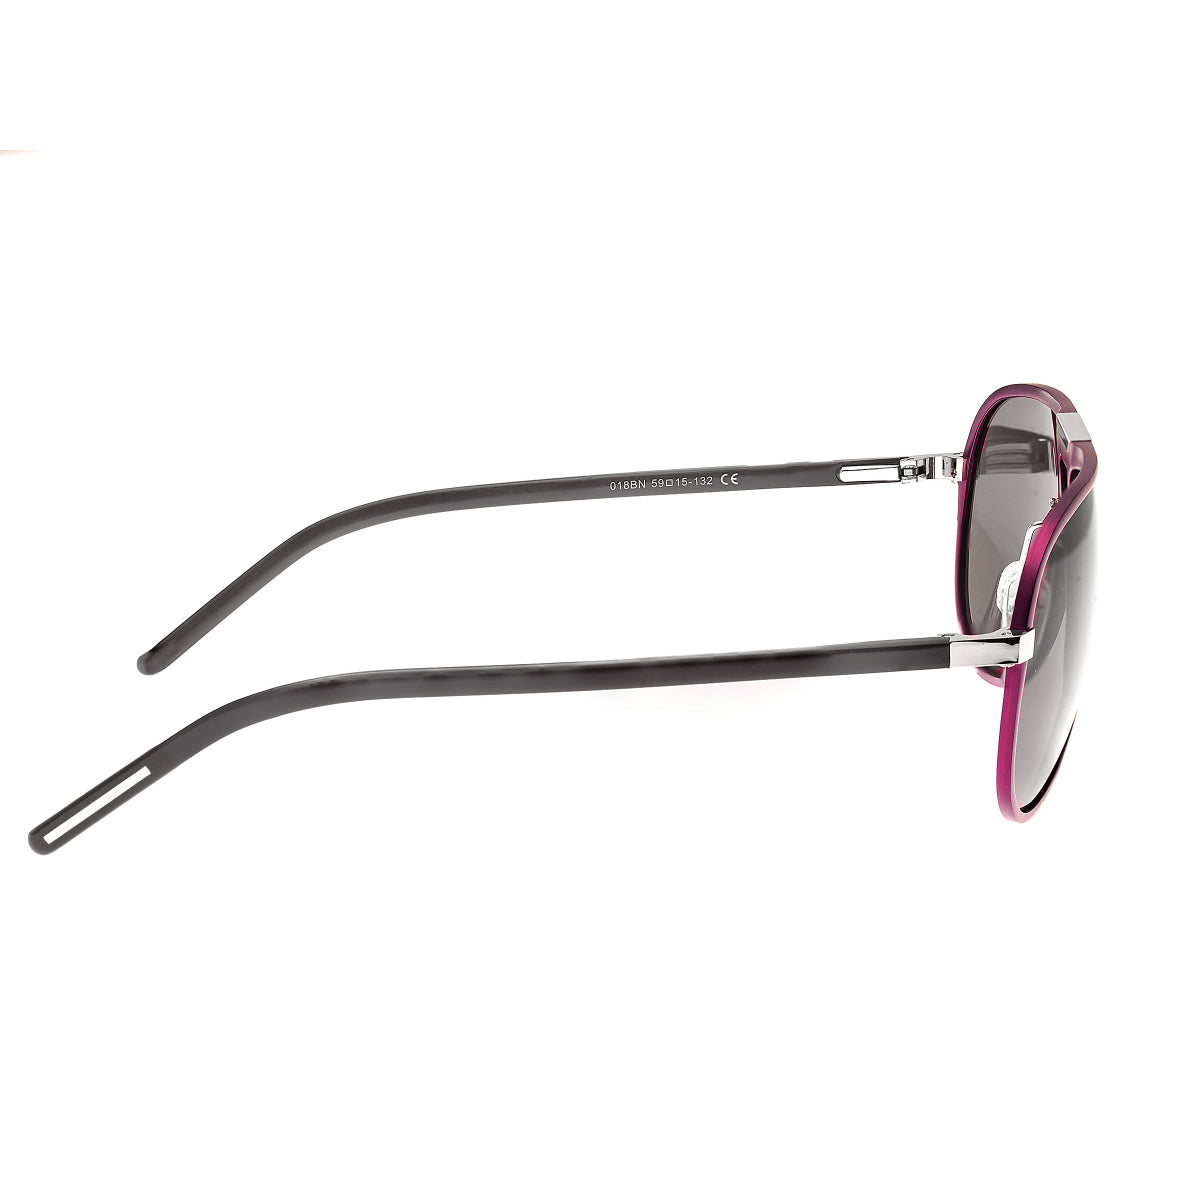 Breed Nova Aluminium Polarized Sunglasses - Pink/Black - BSG018MG